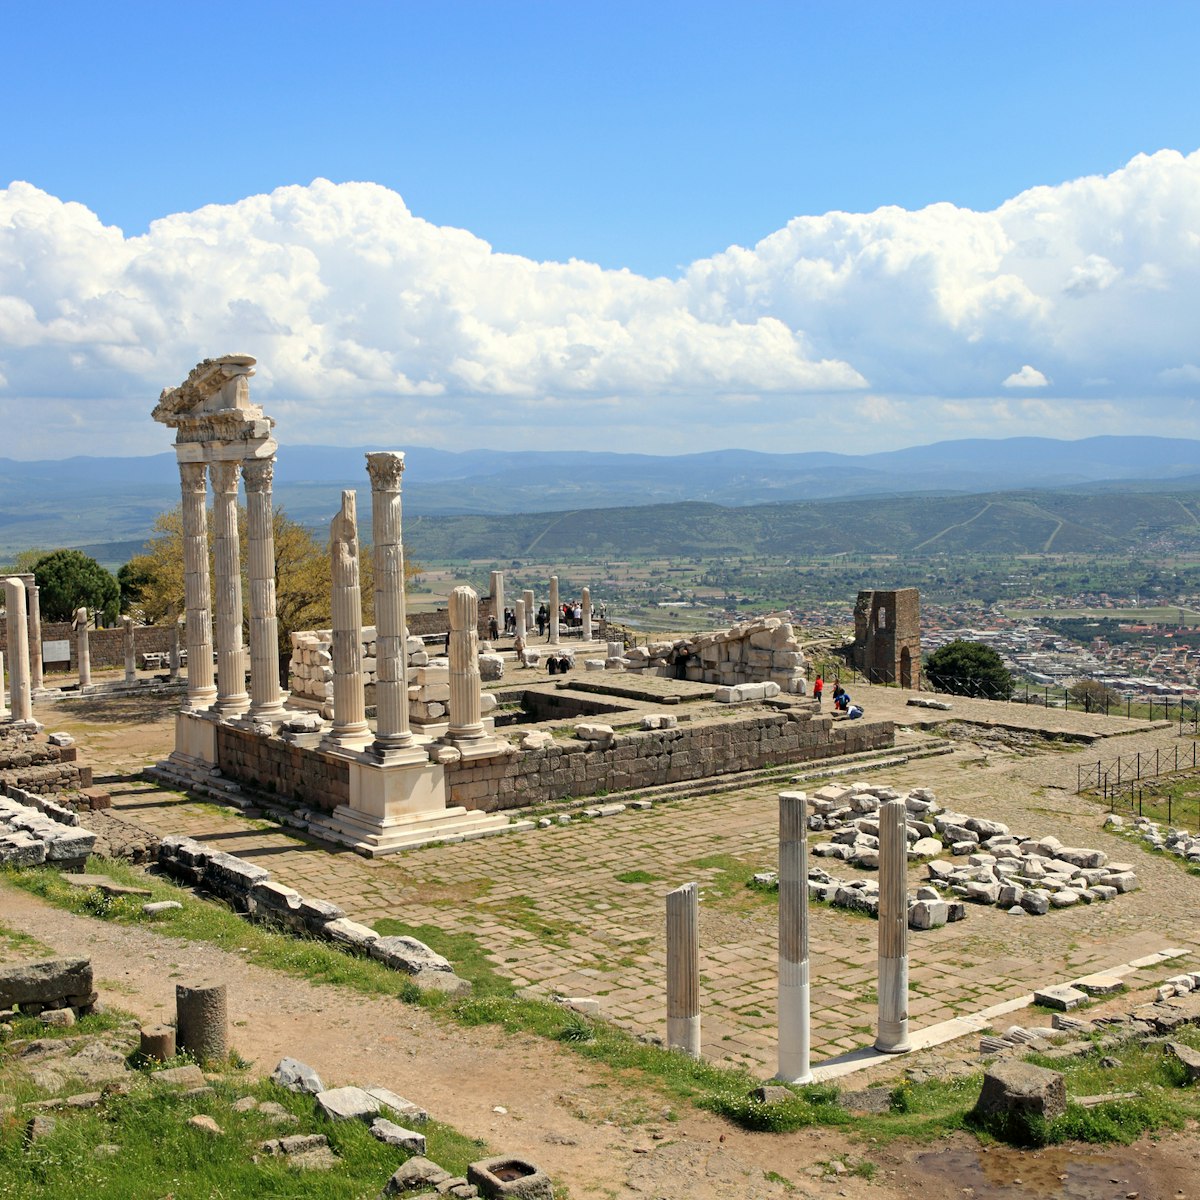 The ancient Temple of Trajan at Pergamos (Bergama)